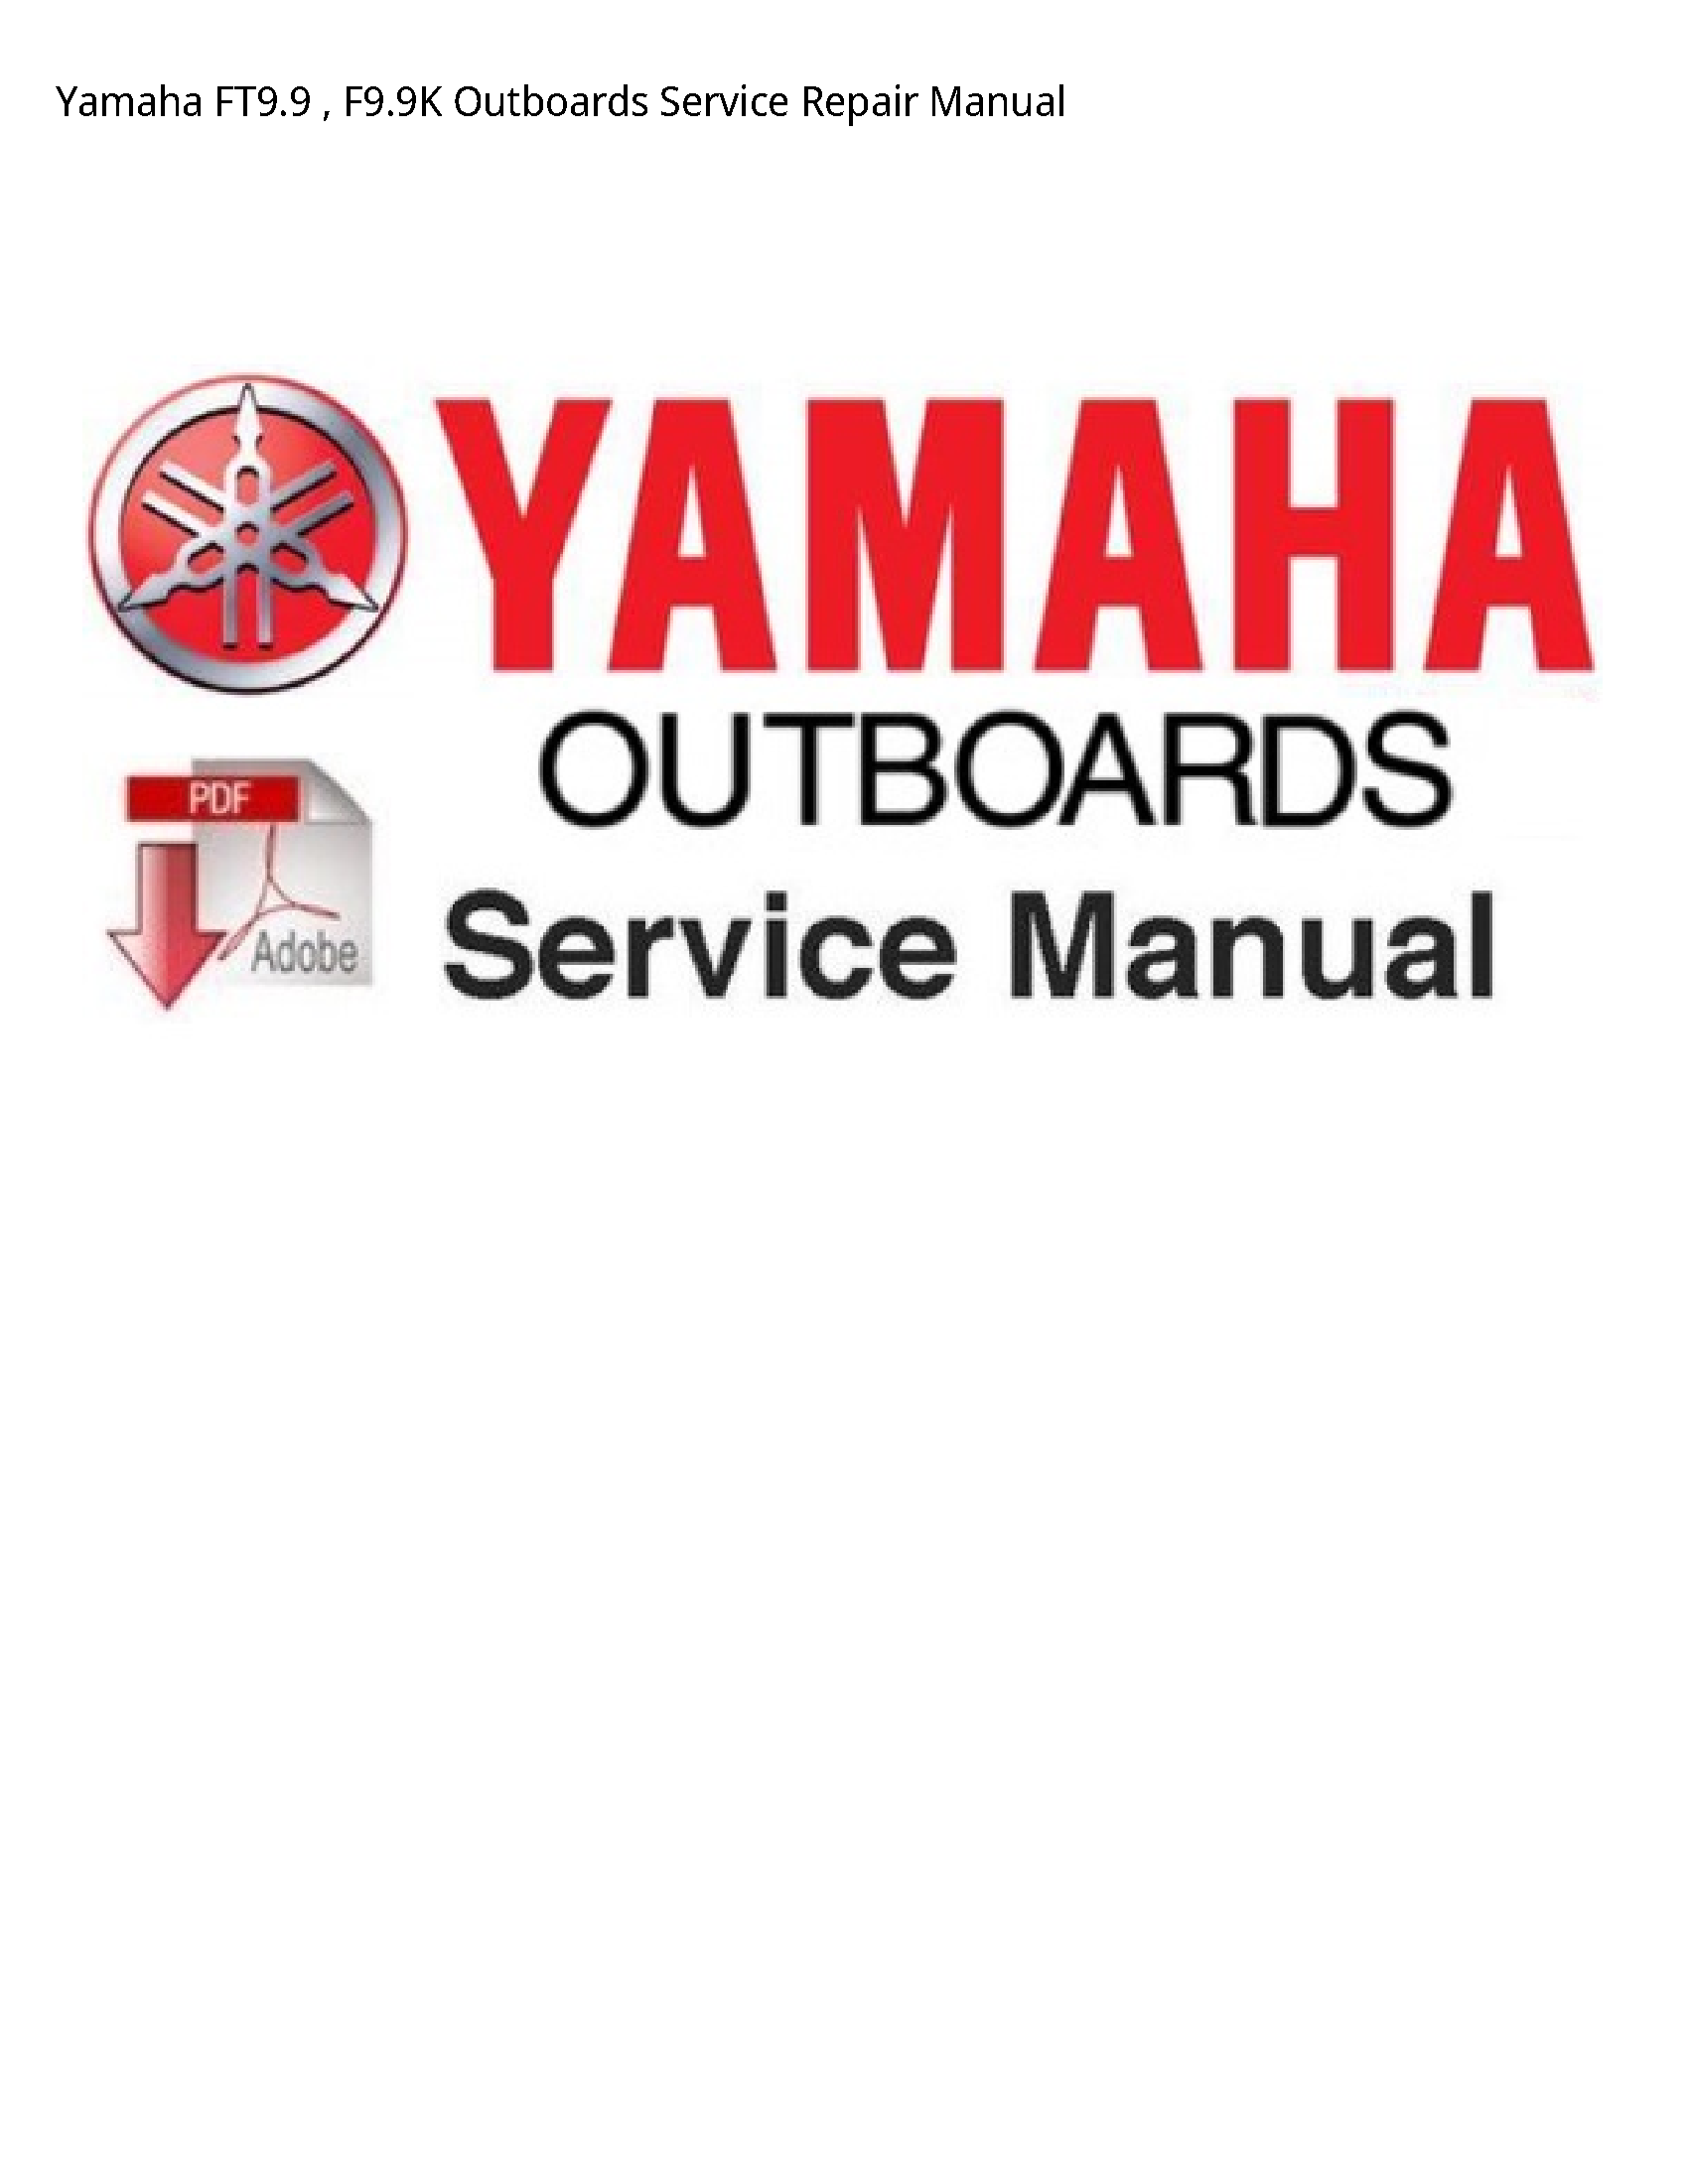 Yamaha FT9.9 Outboards manual